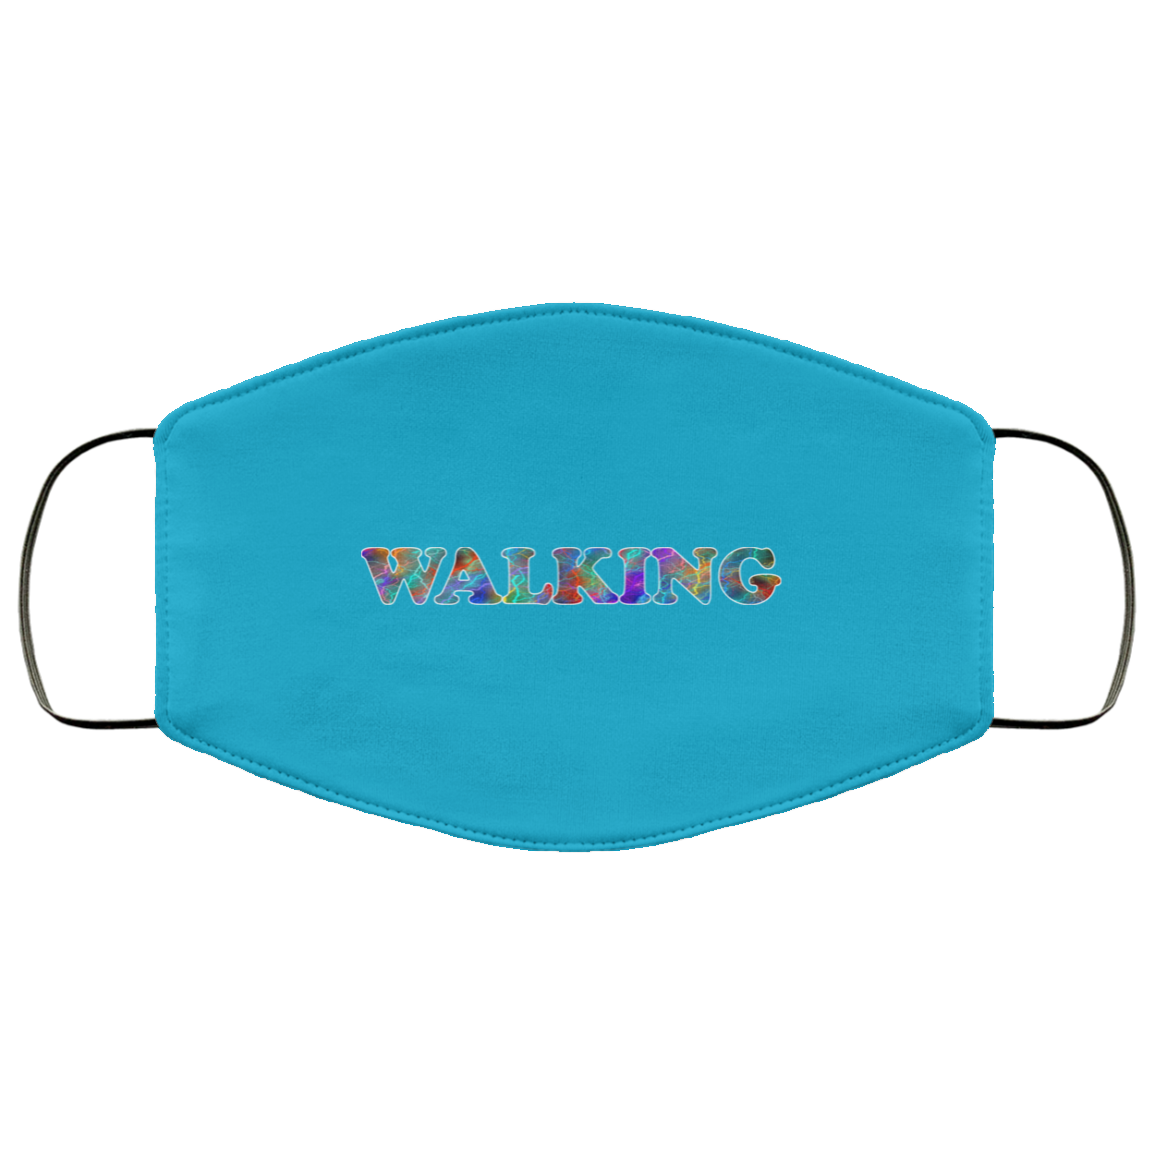 Walking 2 Layer Protective Mask